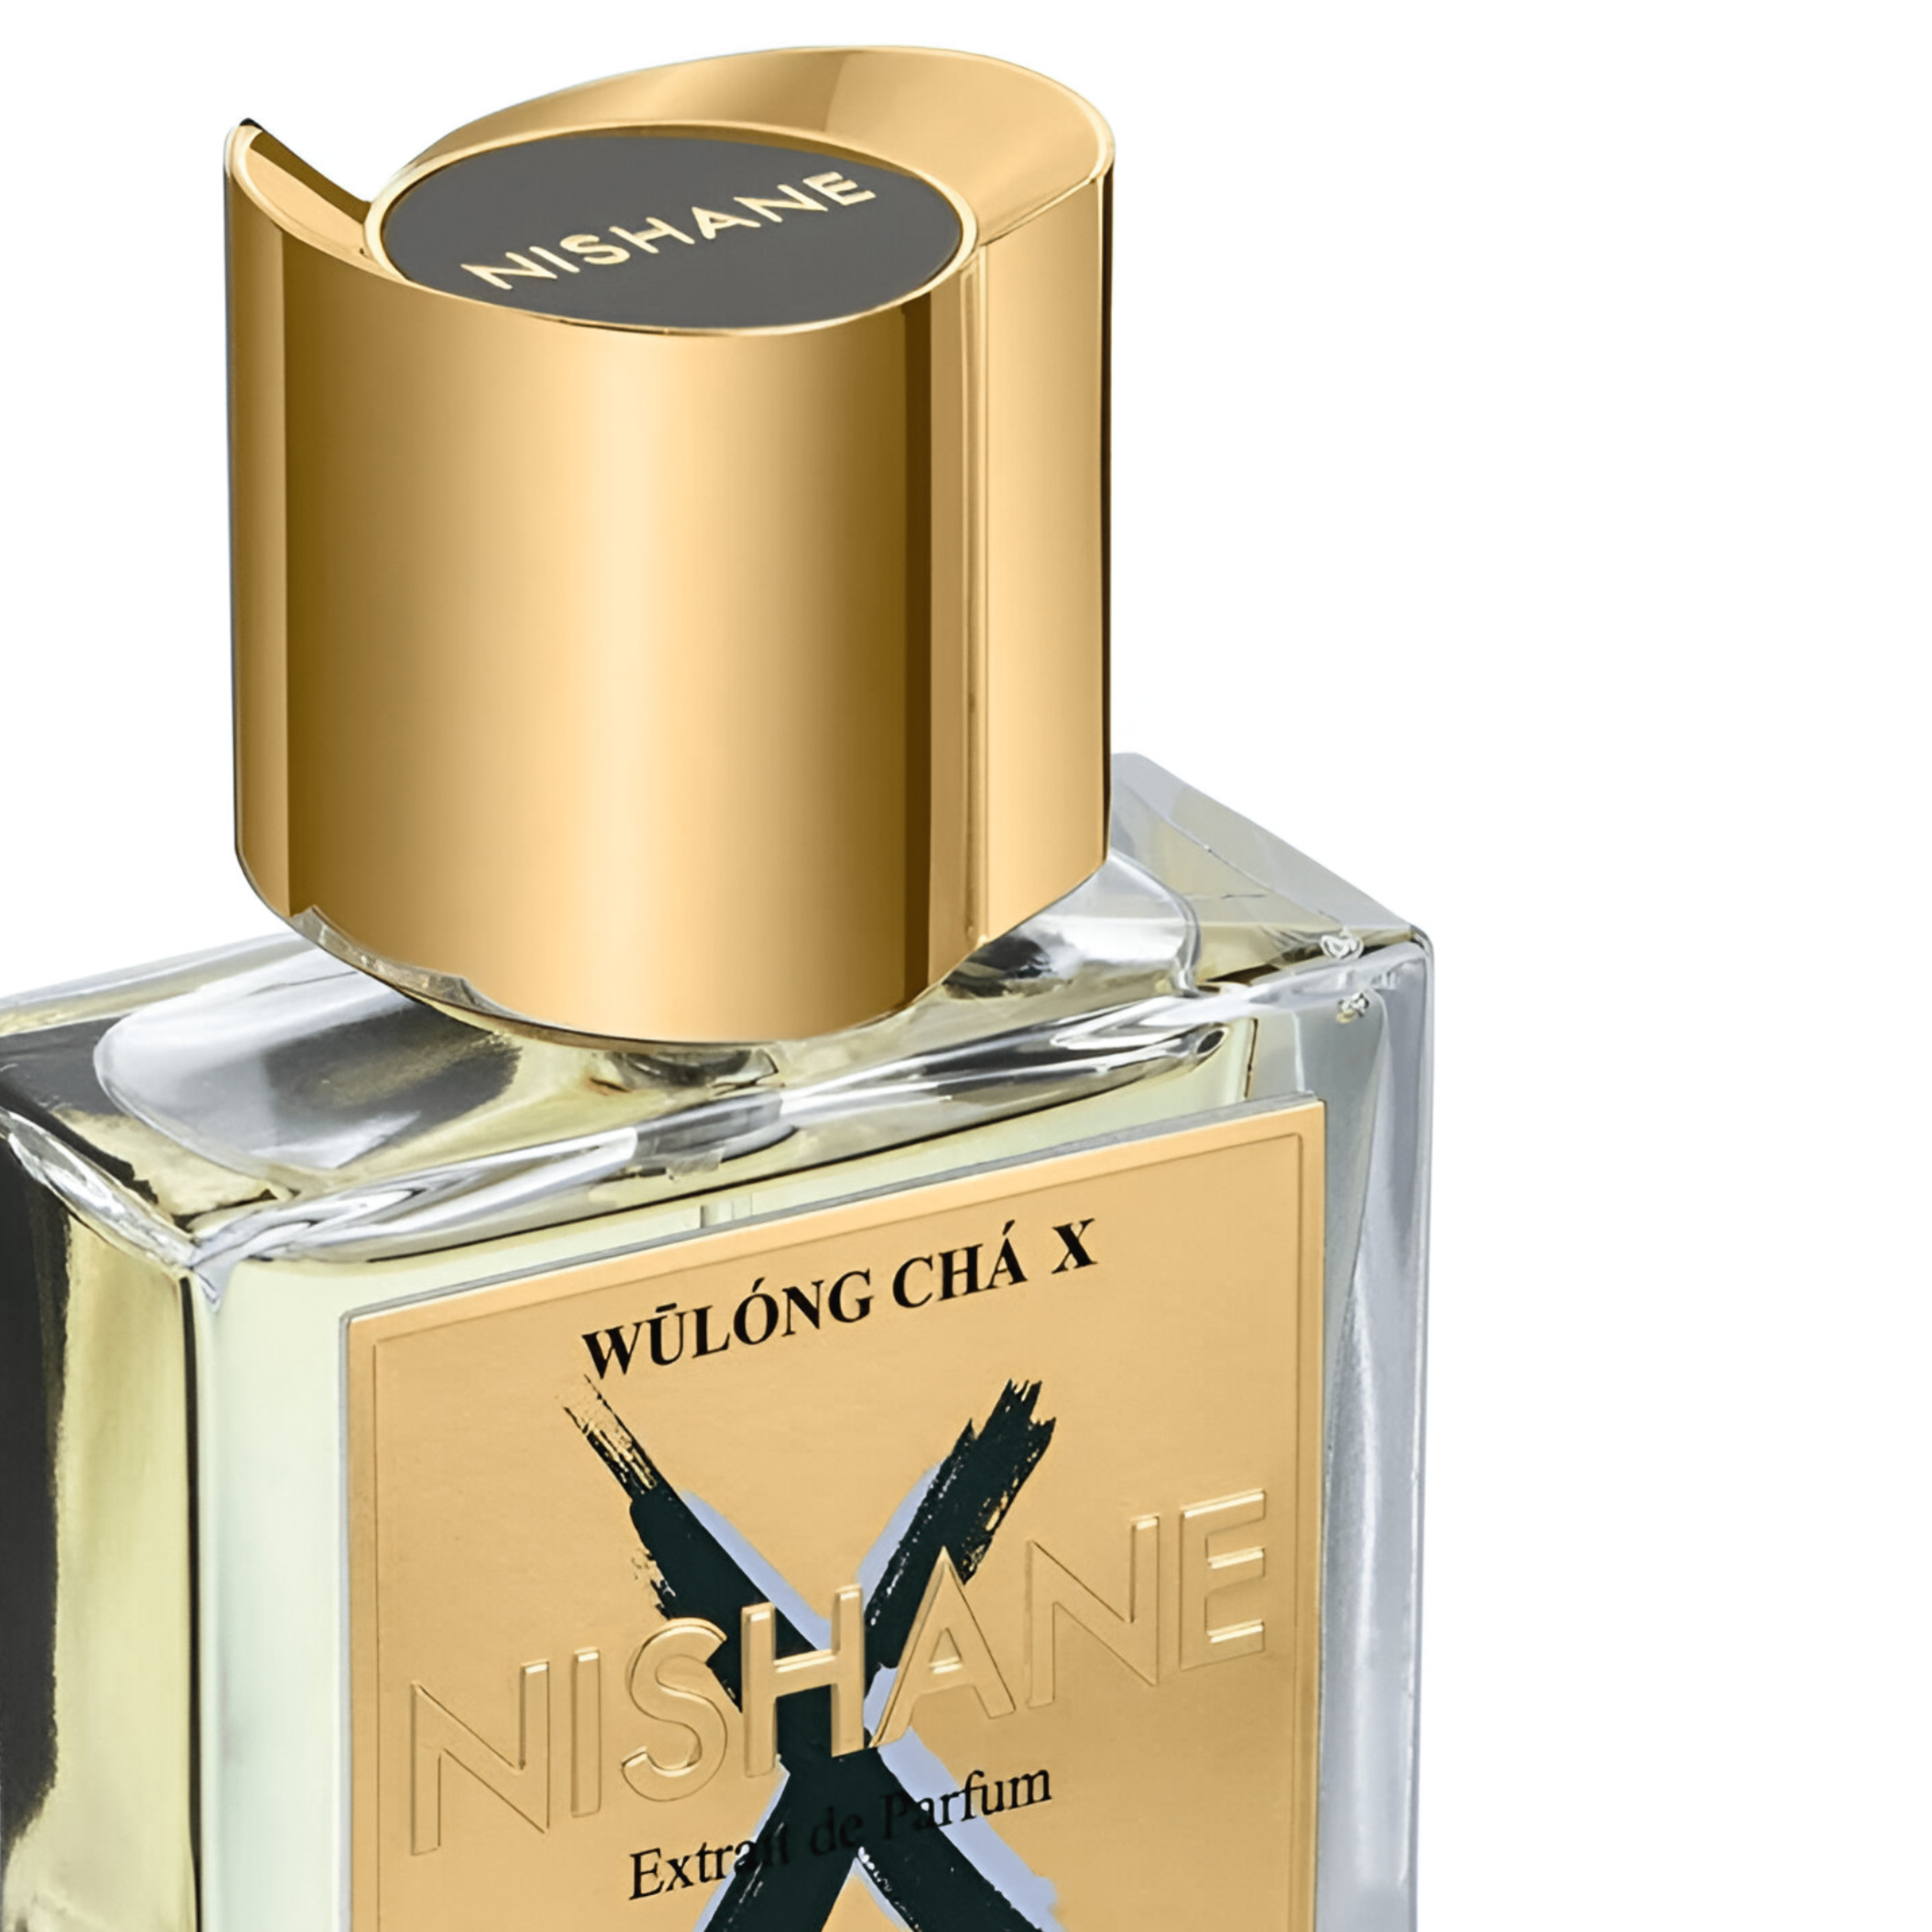 Nishane Wulong Cha X Extrait De Parfum | My Perfume Shop Australia